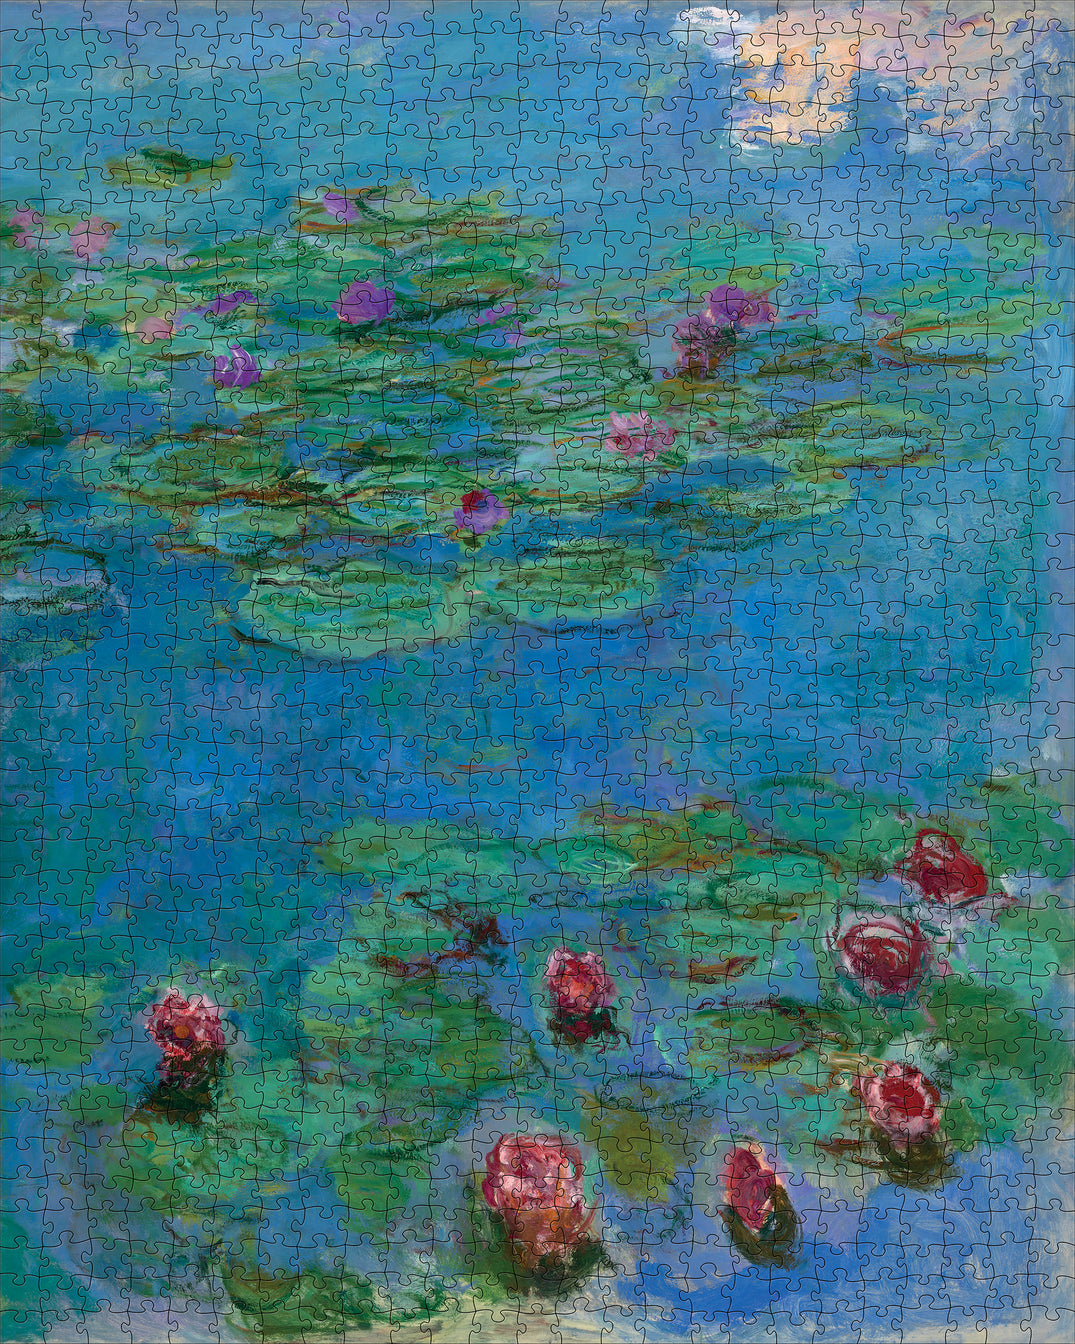 Pomegranate - Claude Monet: Water Lilies - 1000 Piece Jigsaw Puzzle